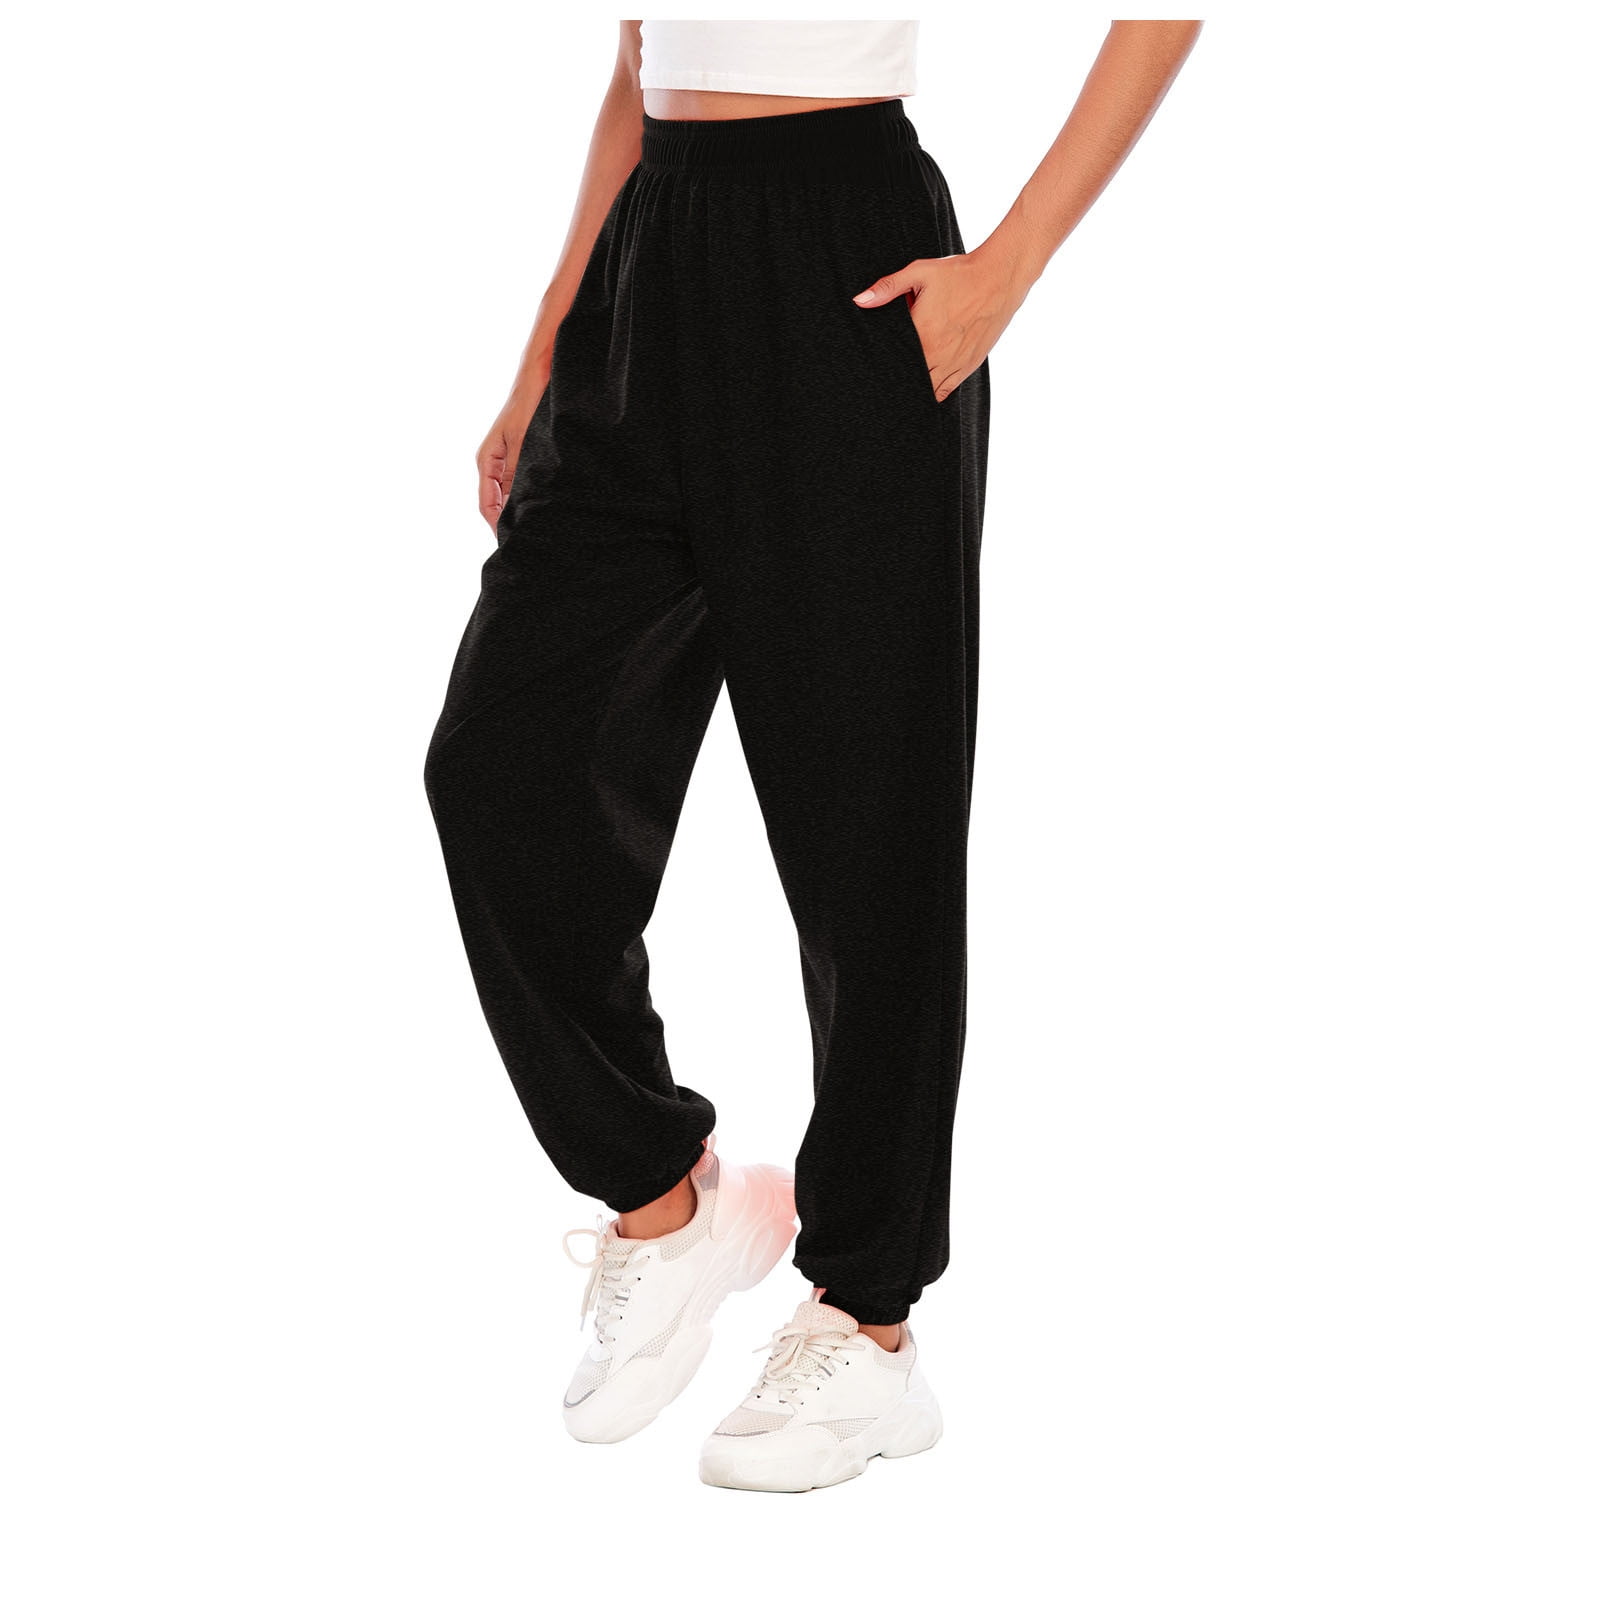 labakihah joggers for women women's animal print bottom sweatpants pockets  high waist sporty gym fit jogger pants lounge trousers black 